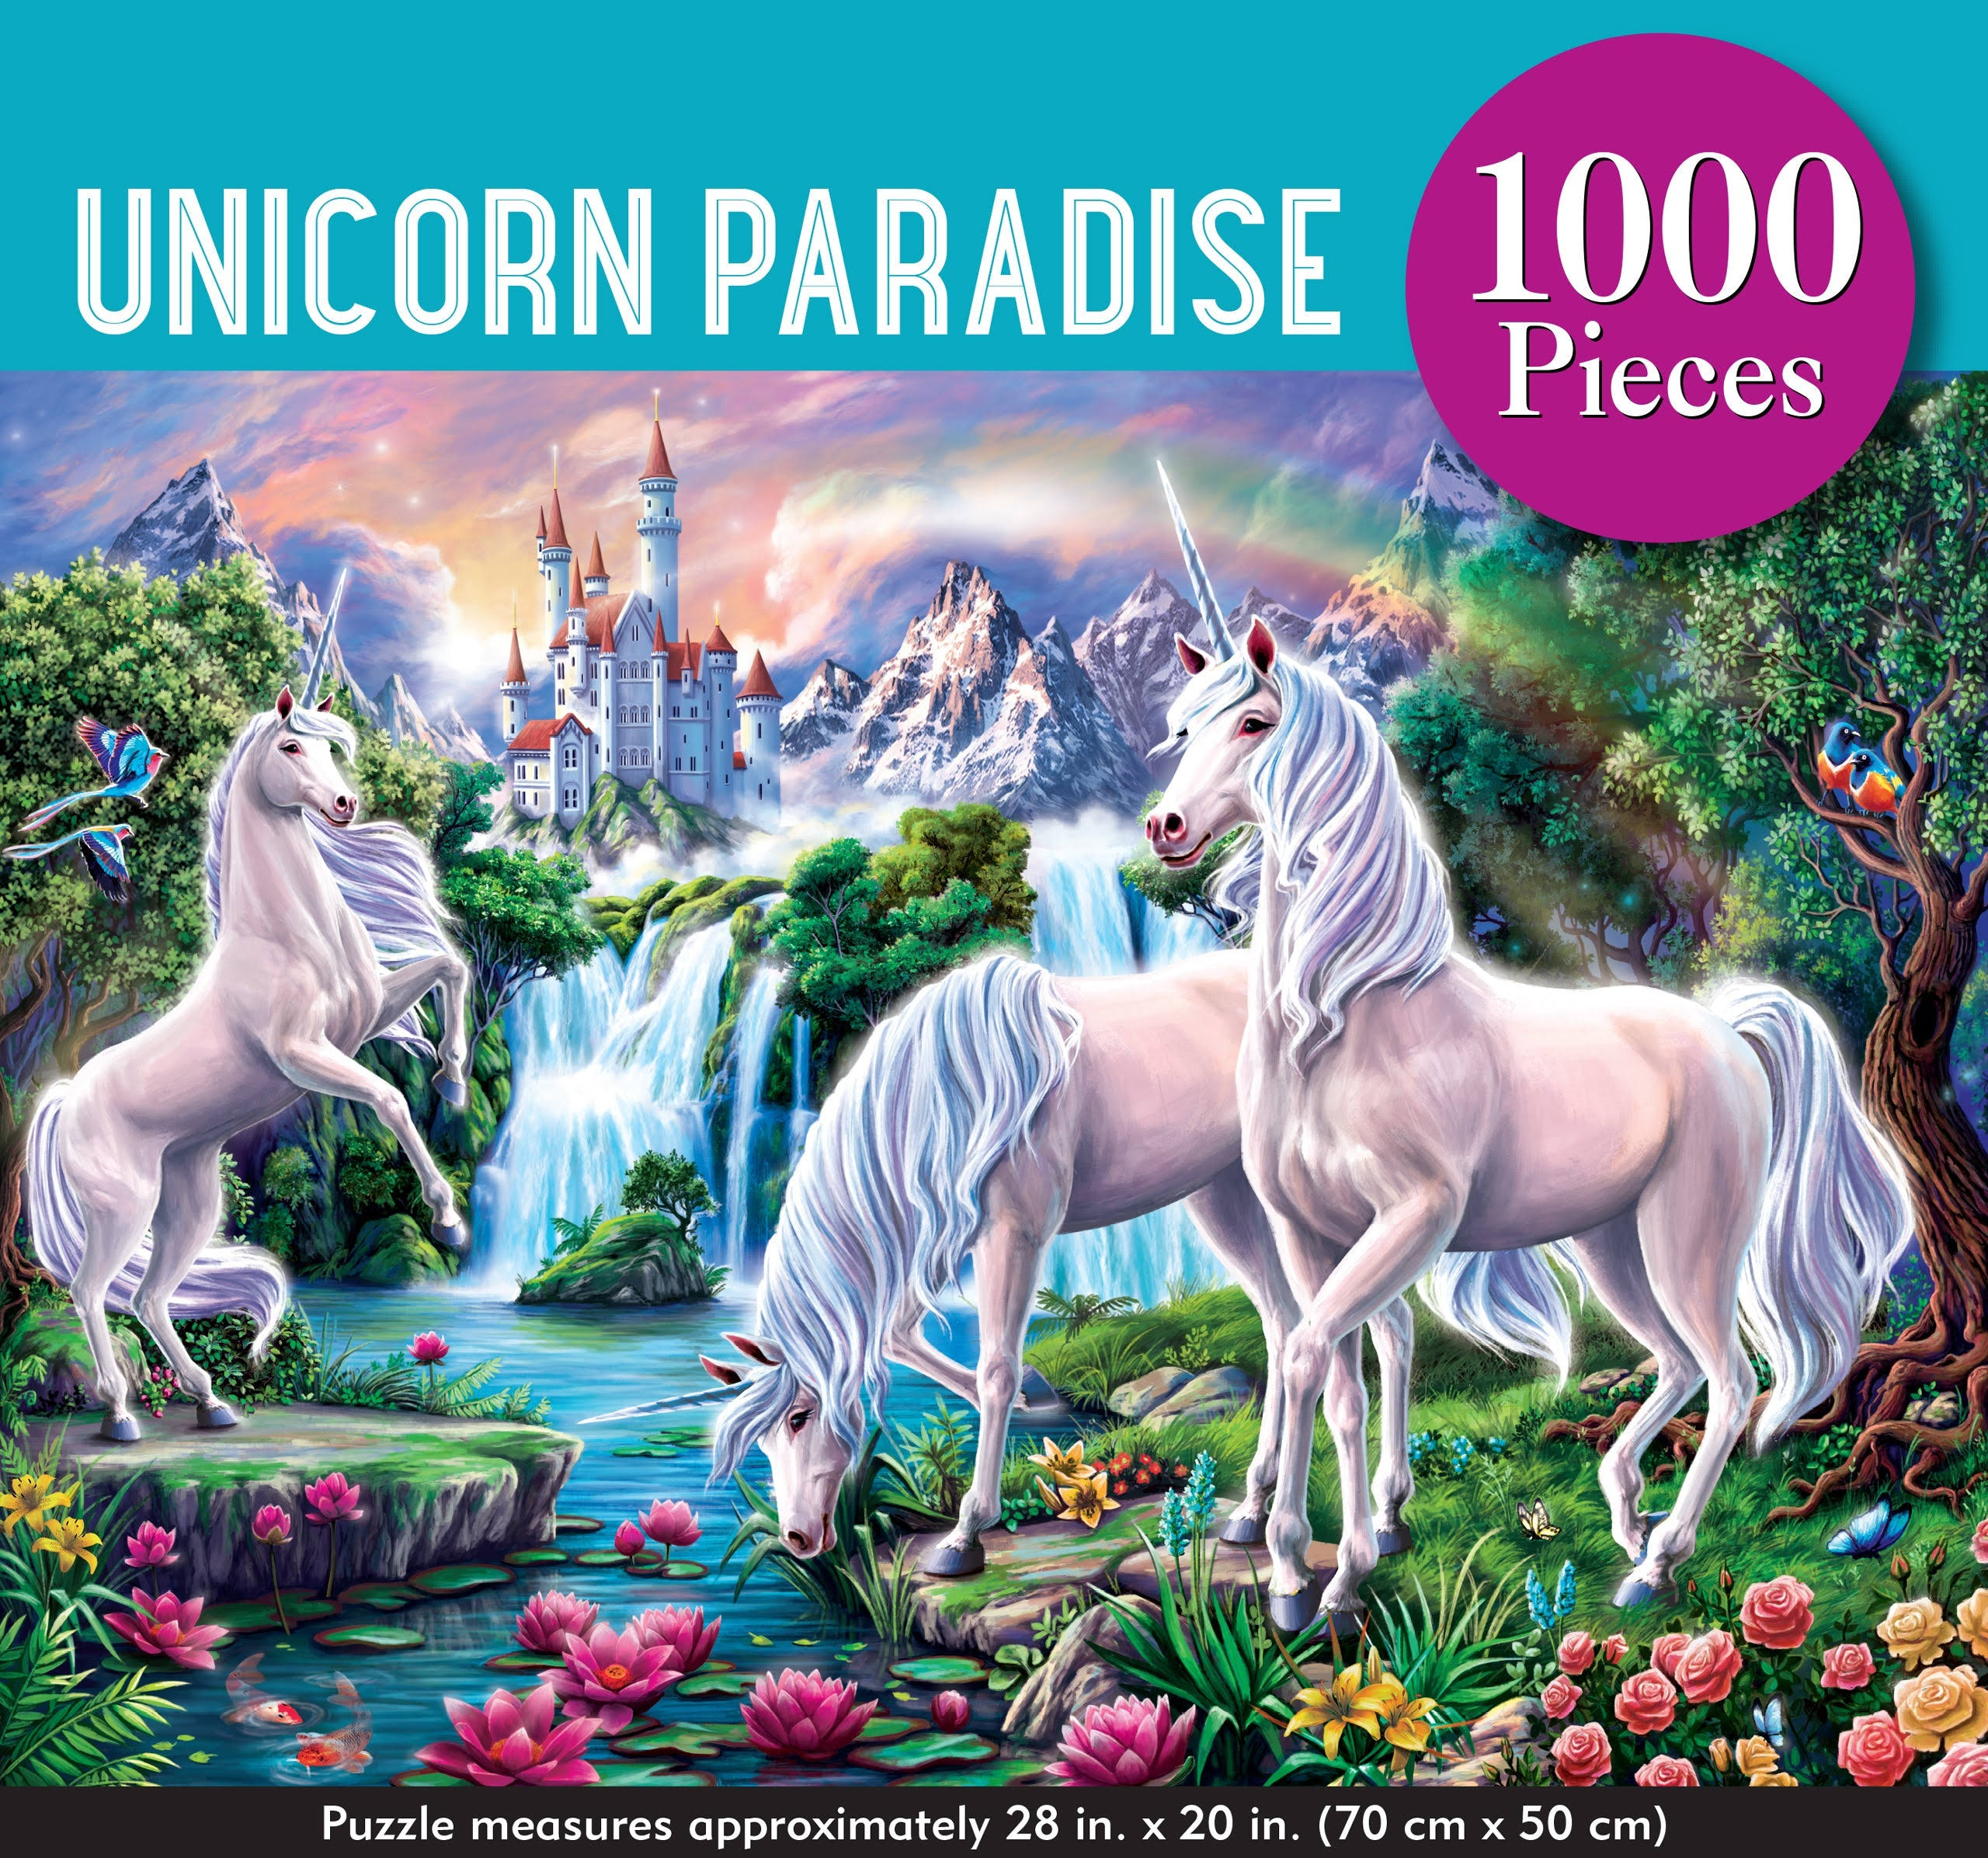 Unicorn Paradise Jigsaw Puzzle: 1000 Pieces